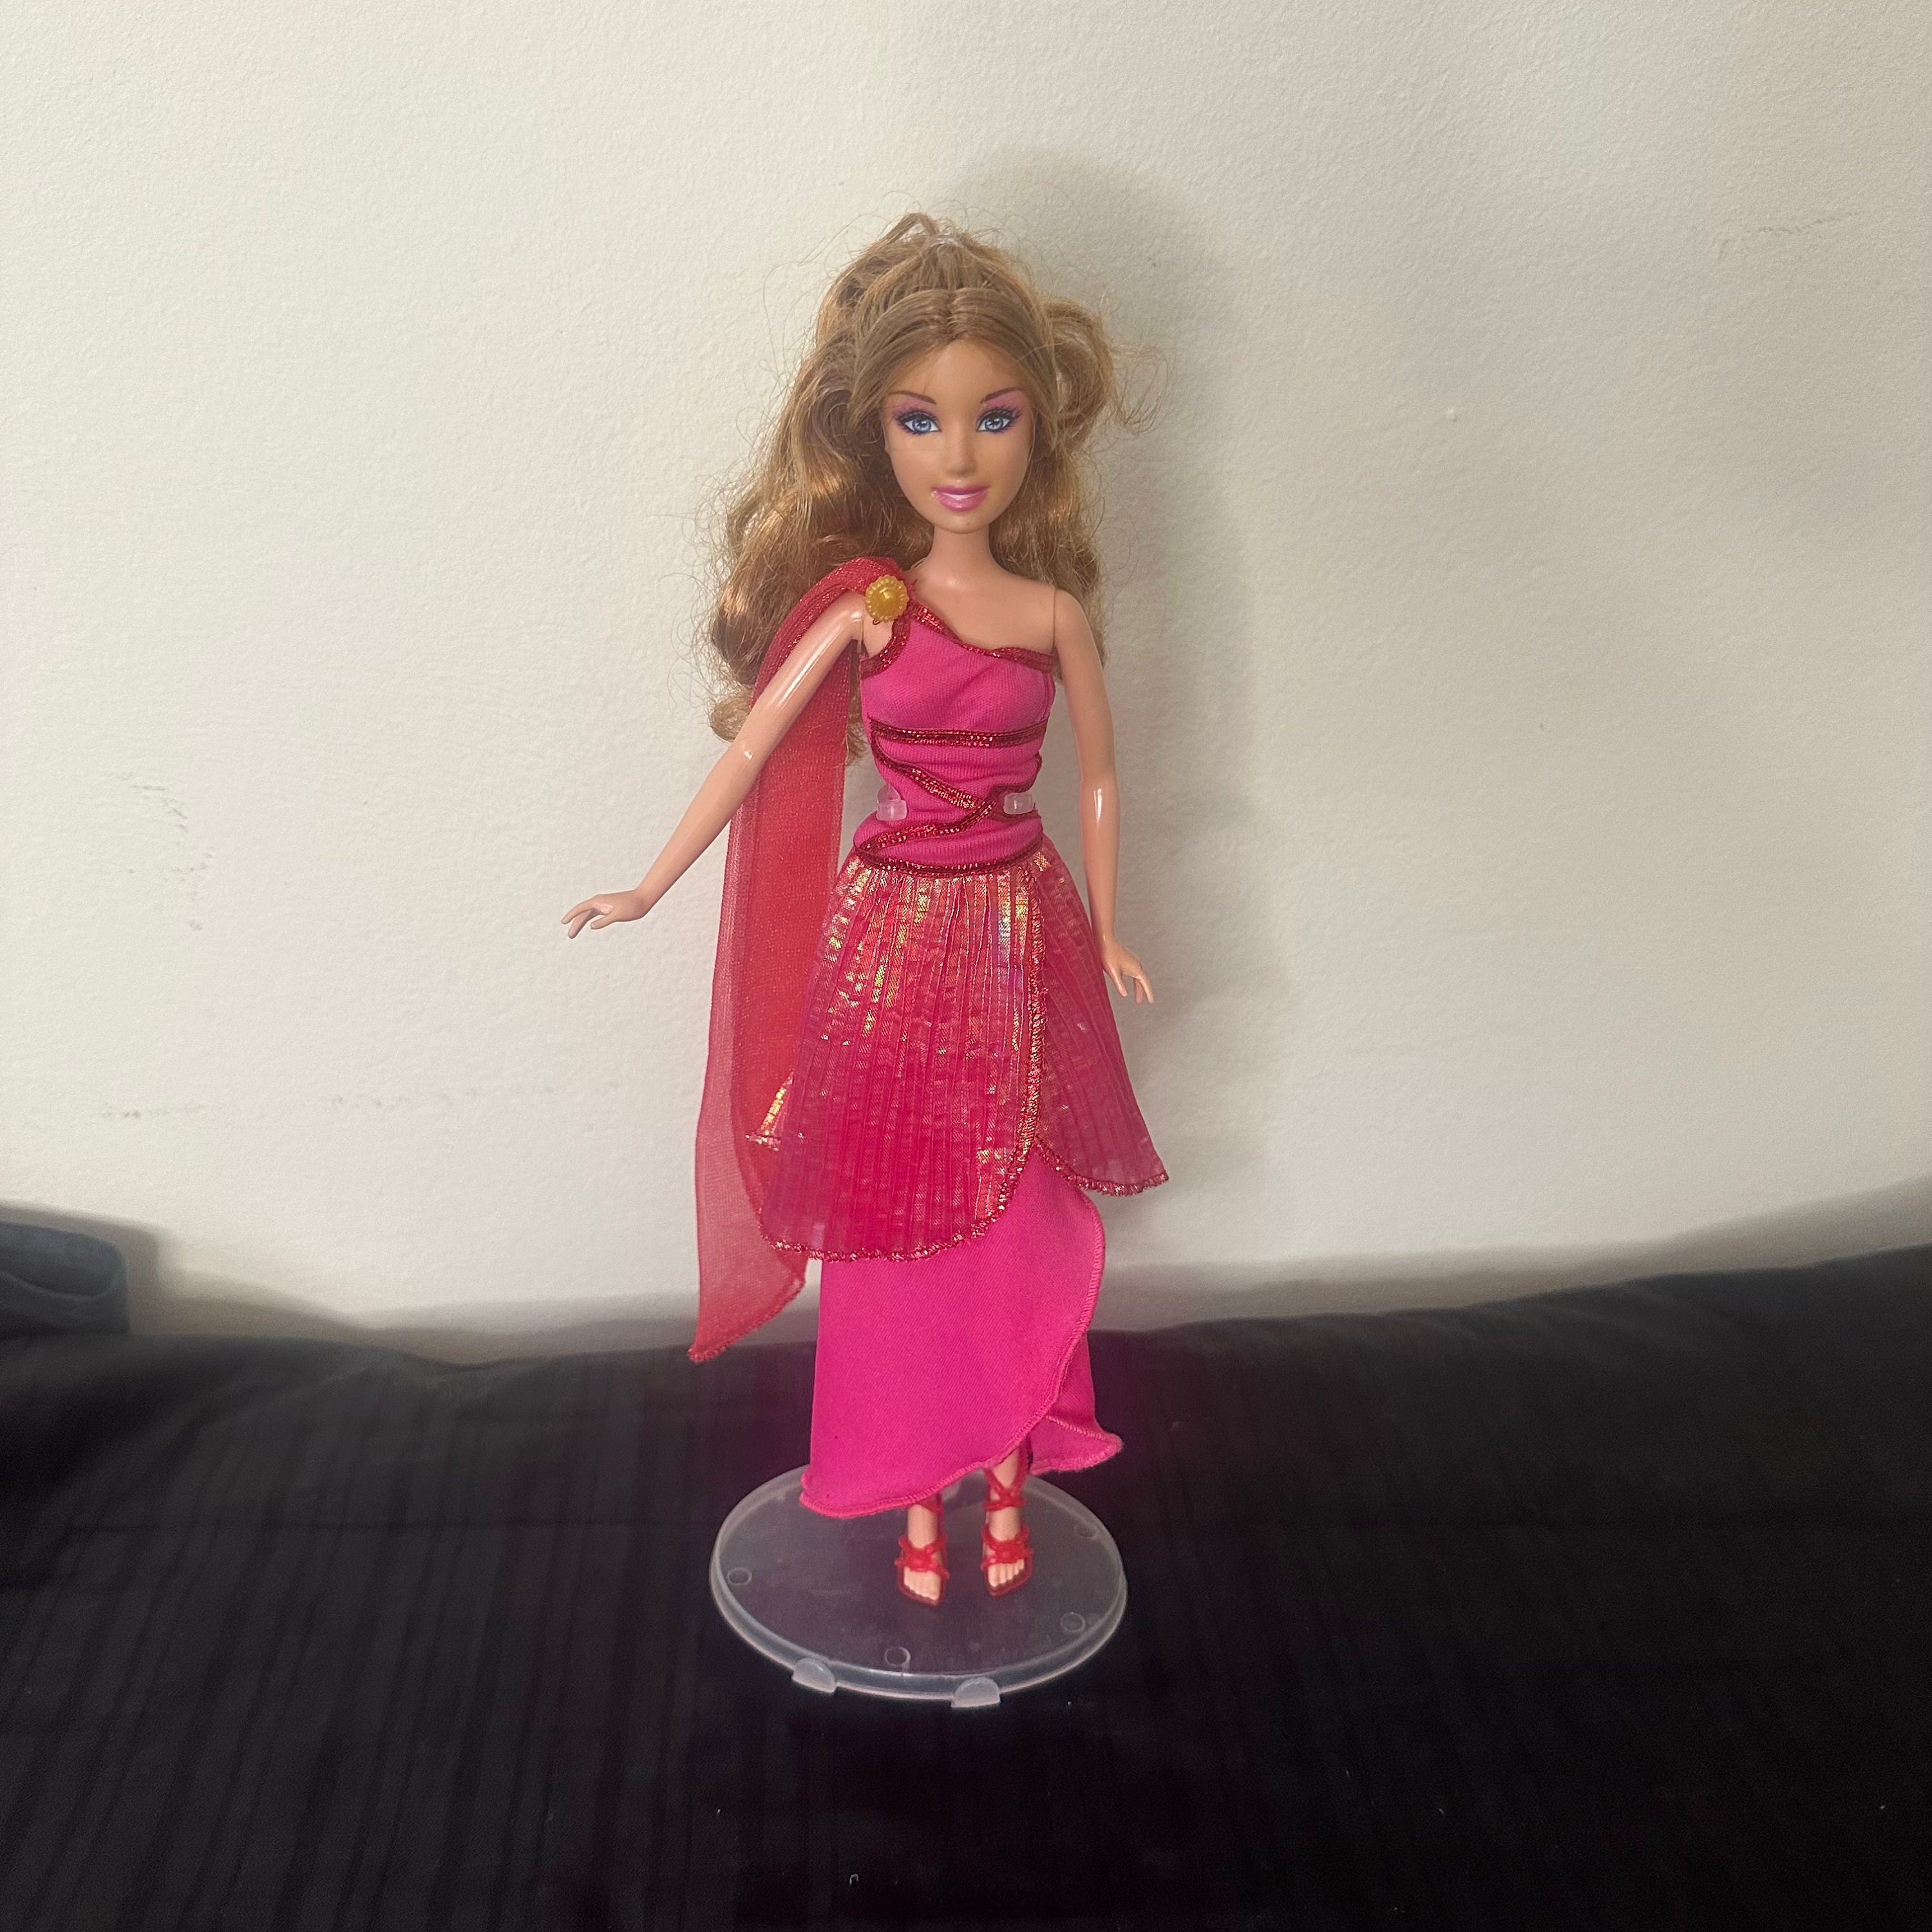 OOAK 100% Handmade Funko Pop Style 3D Figure of Barbie With Skates 